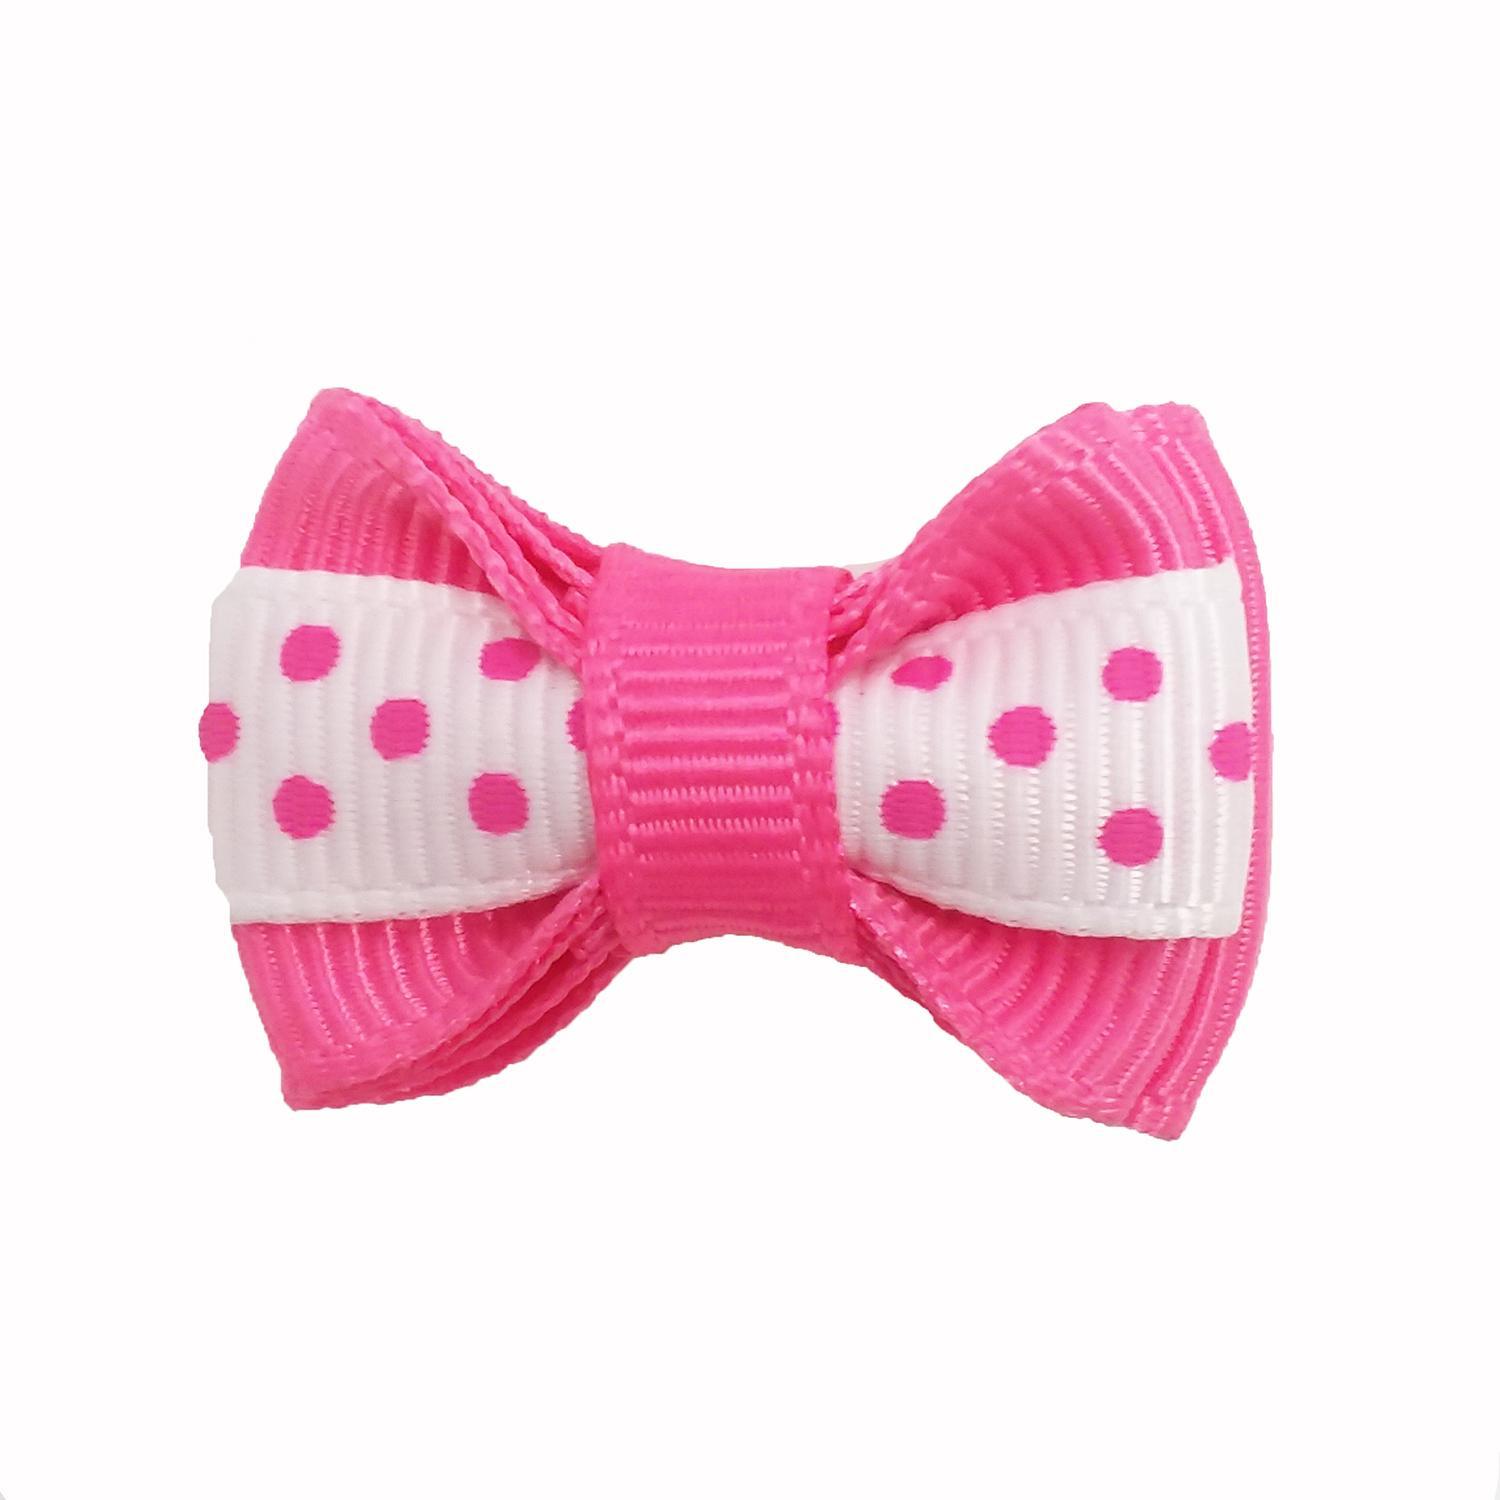 Polka Dot Stripe Dog Bow with Alligator Clip - Hot Pink